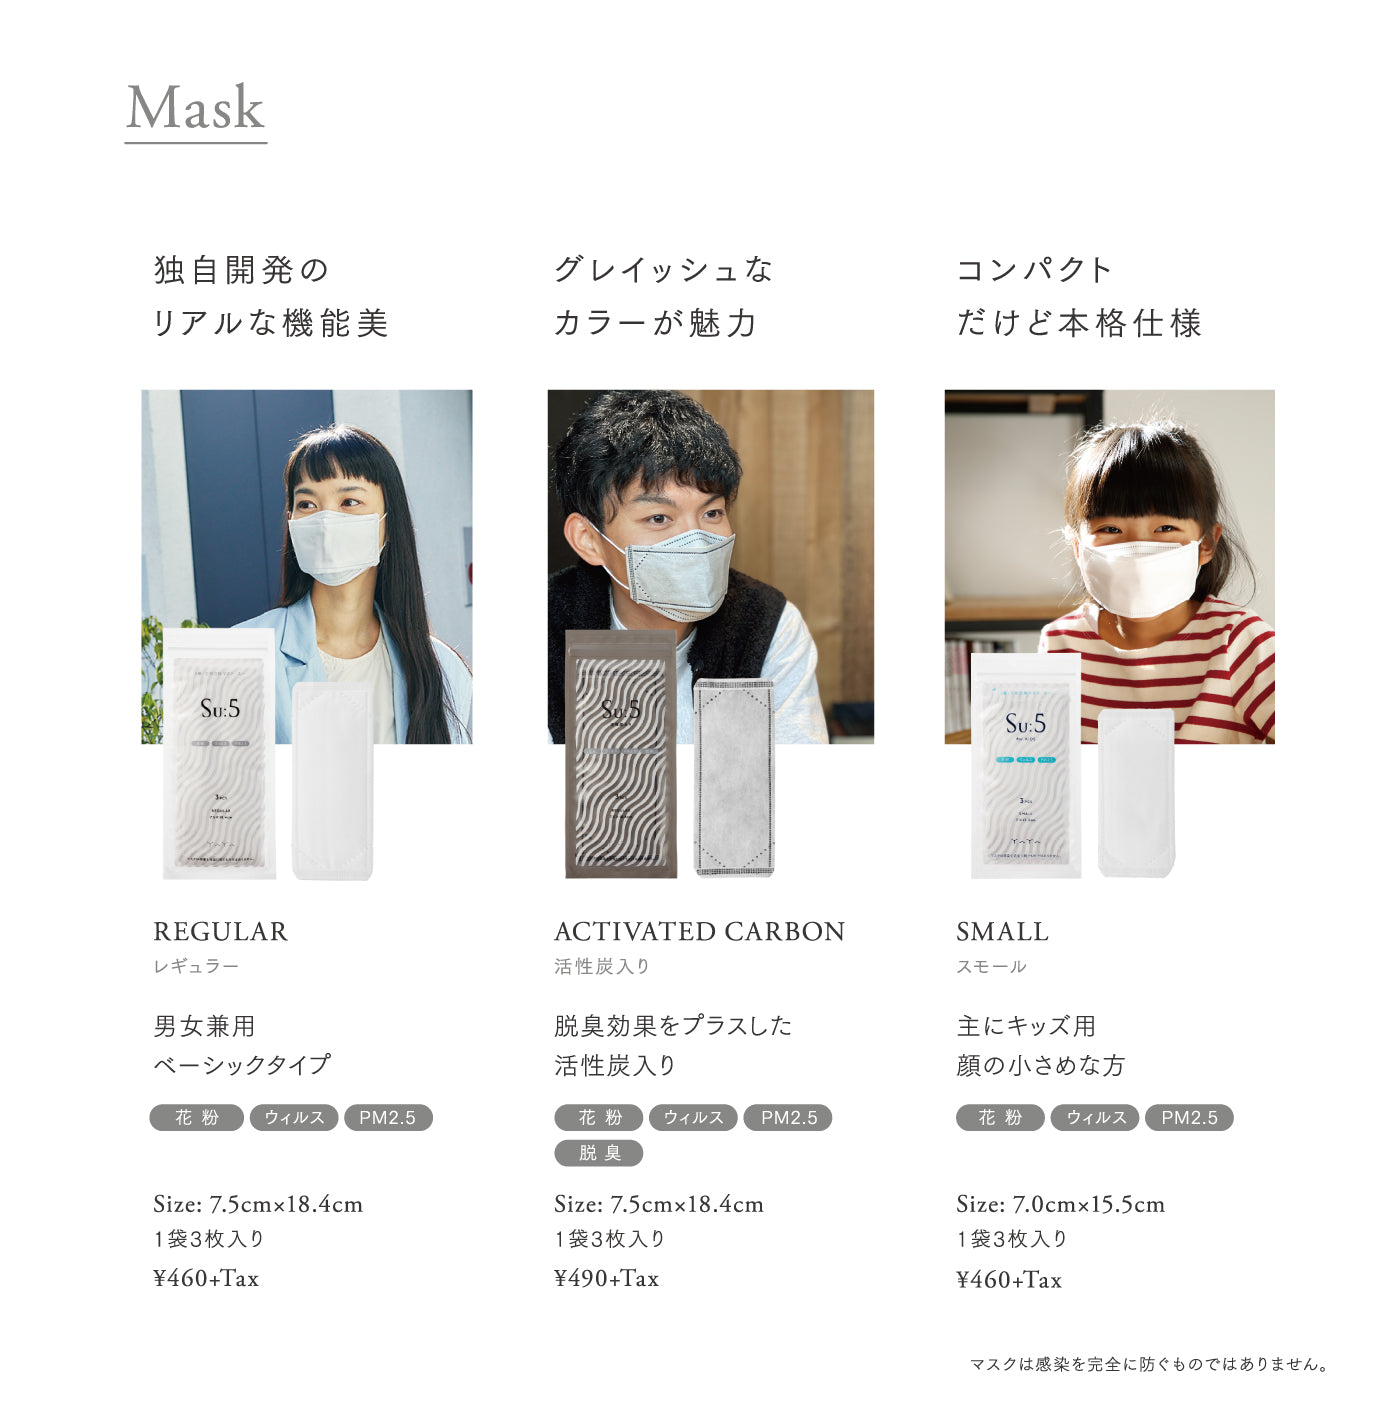 Suː5 Mask Activated Carbon REGULAR 10bags/30pcs 